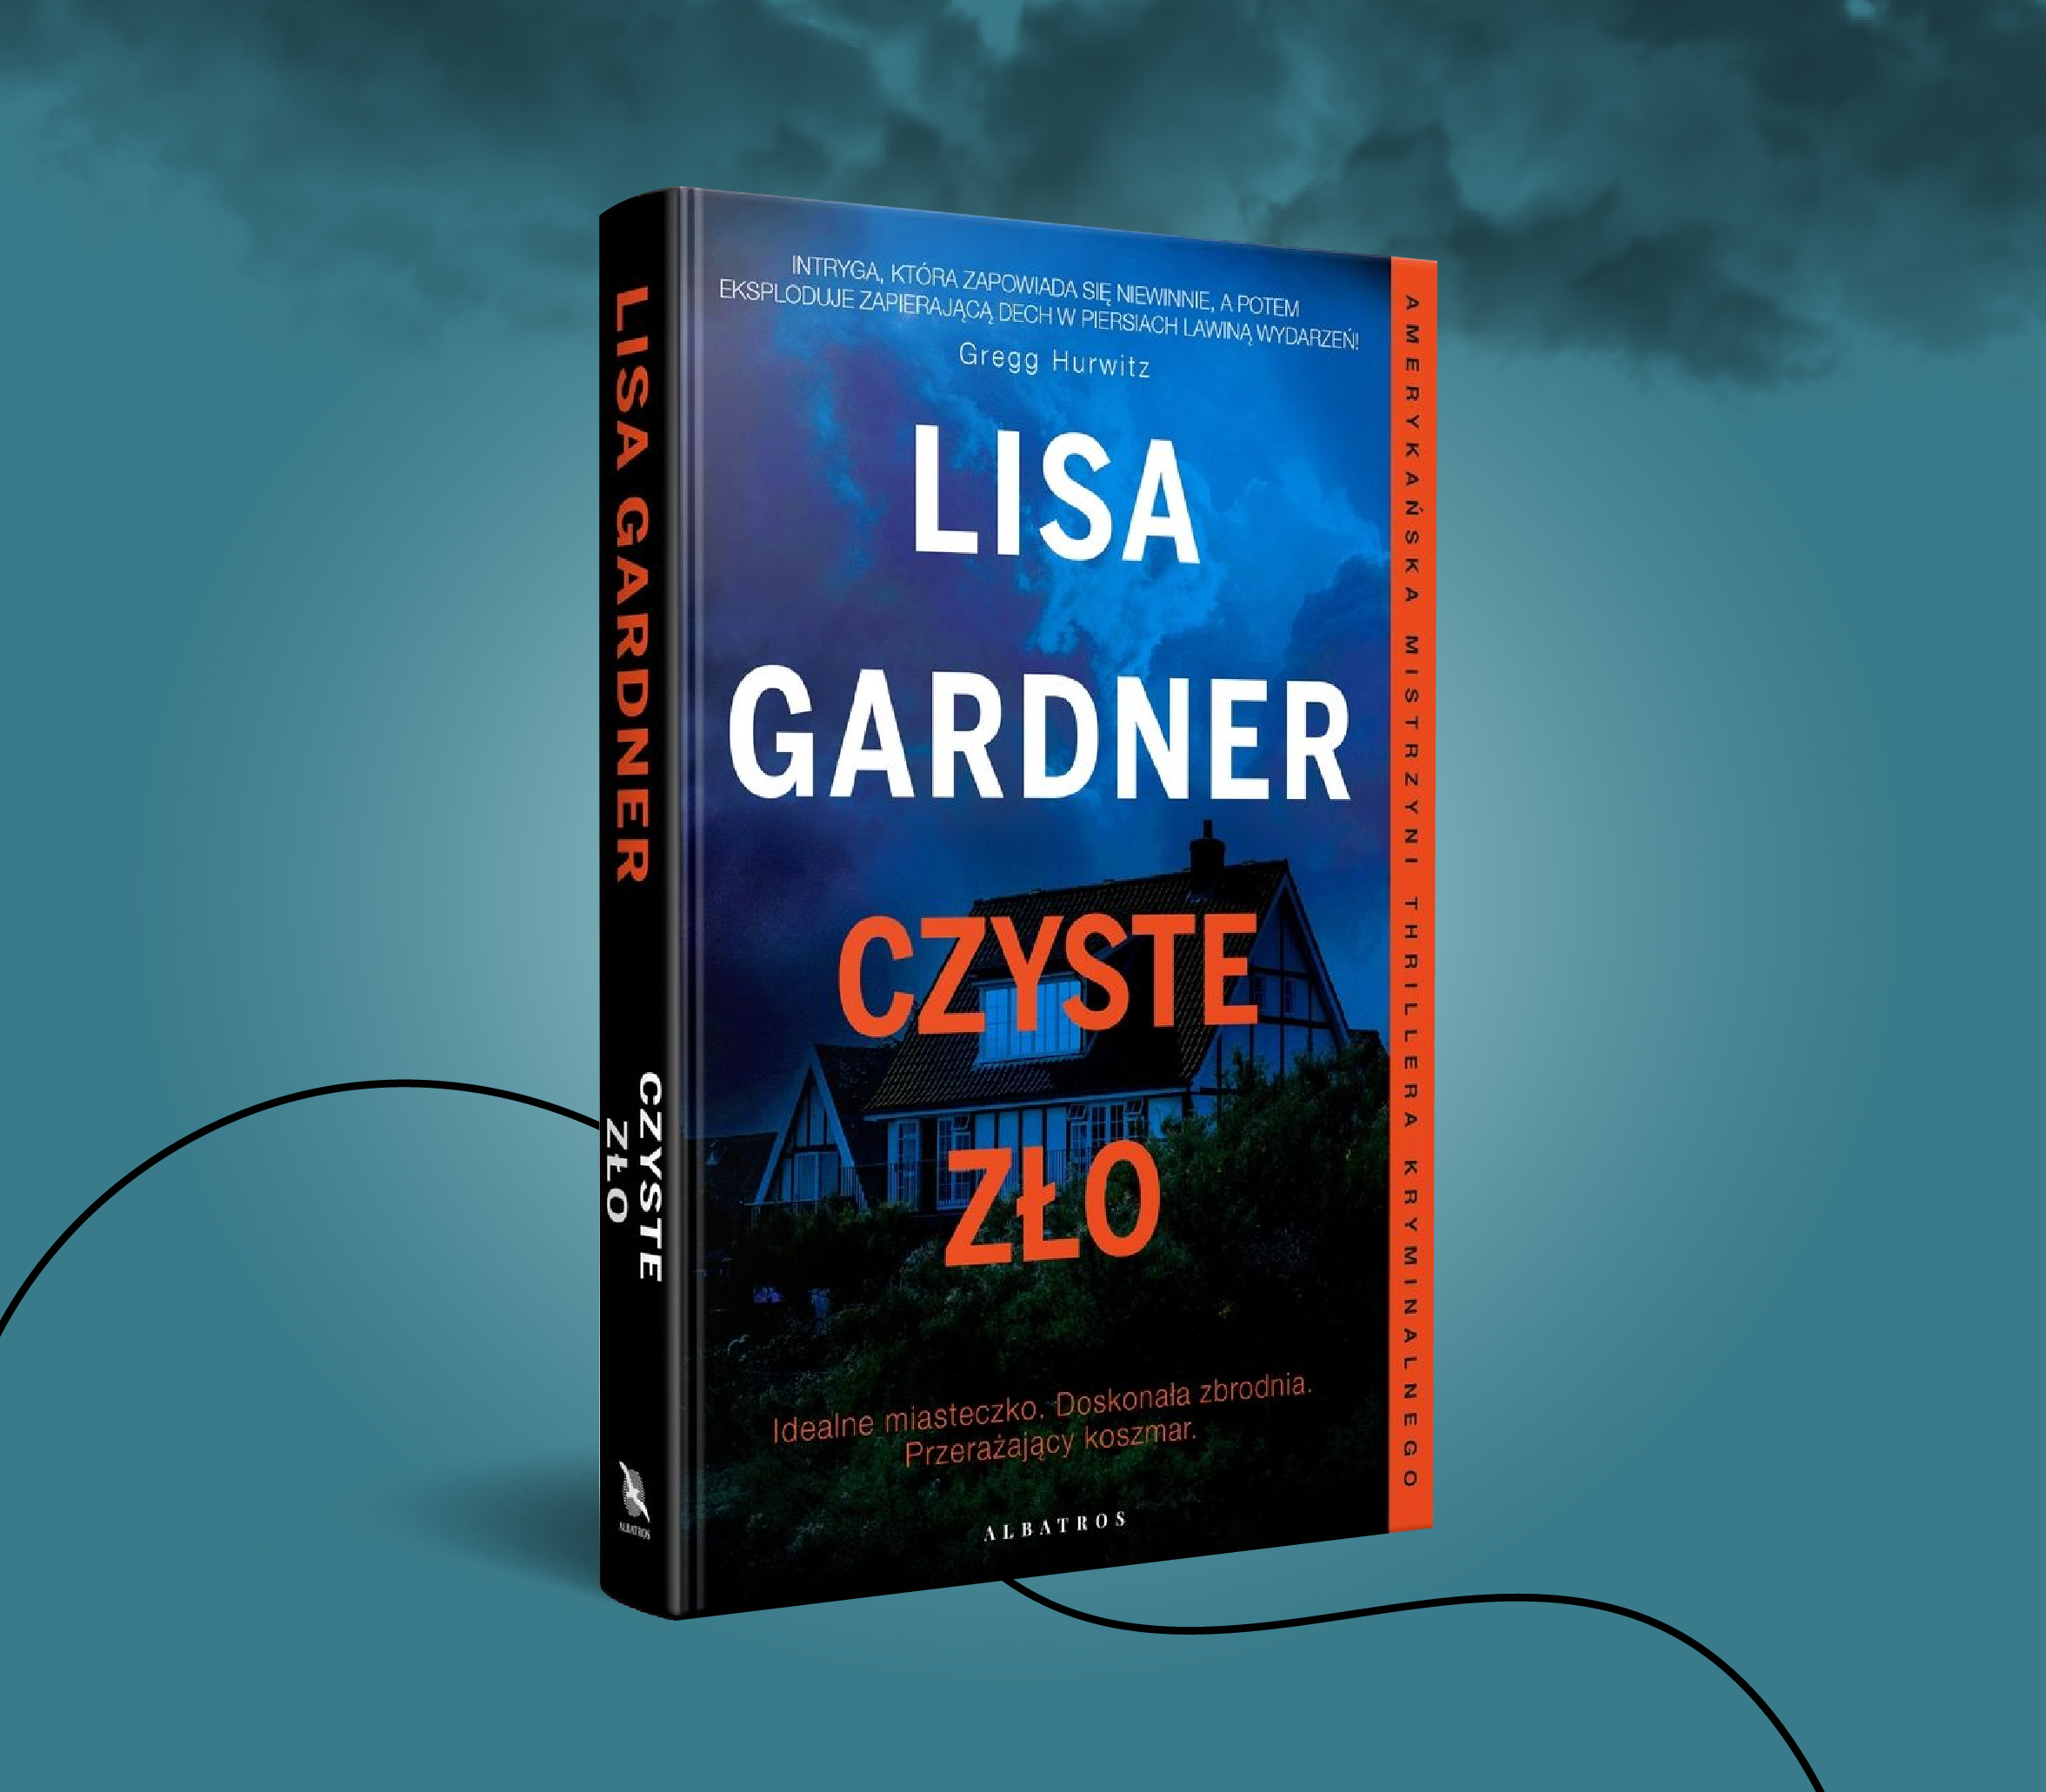 Lisa Gardner: “Czyste zło”. Gatunek: thriller kryminalny nieodkładalny